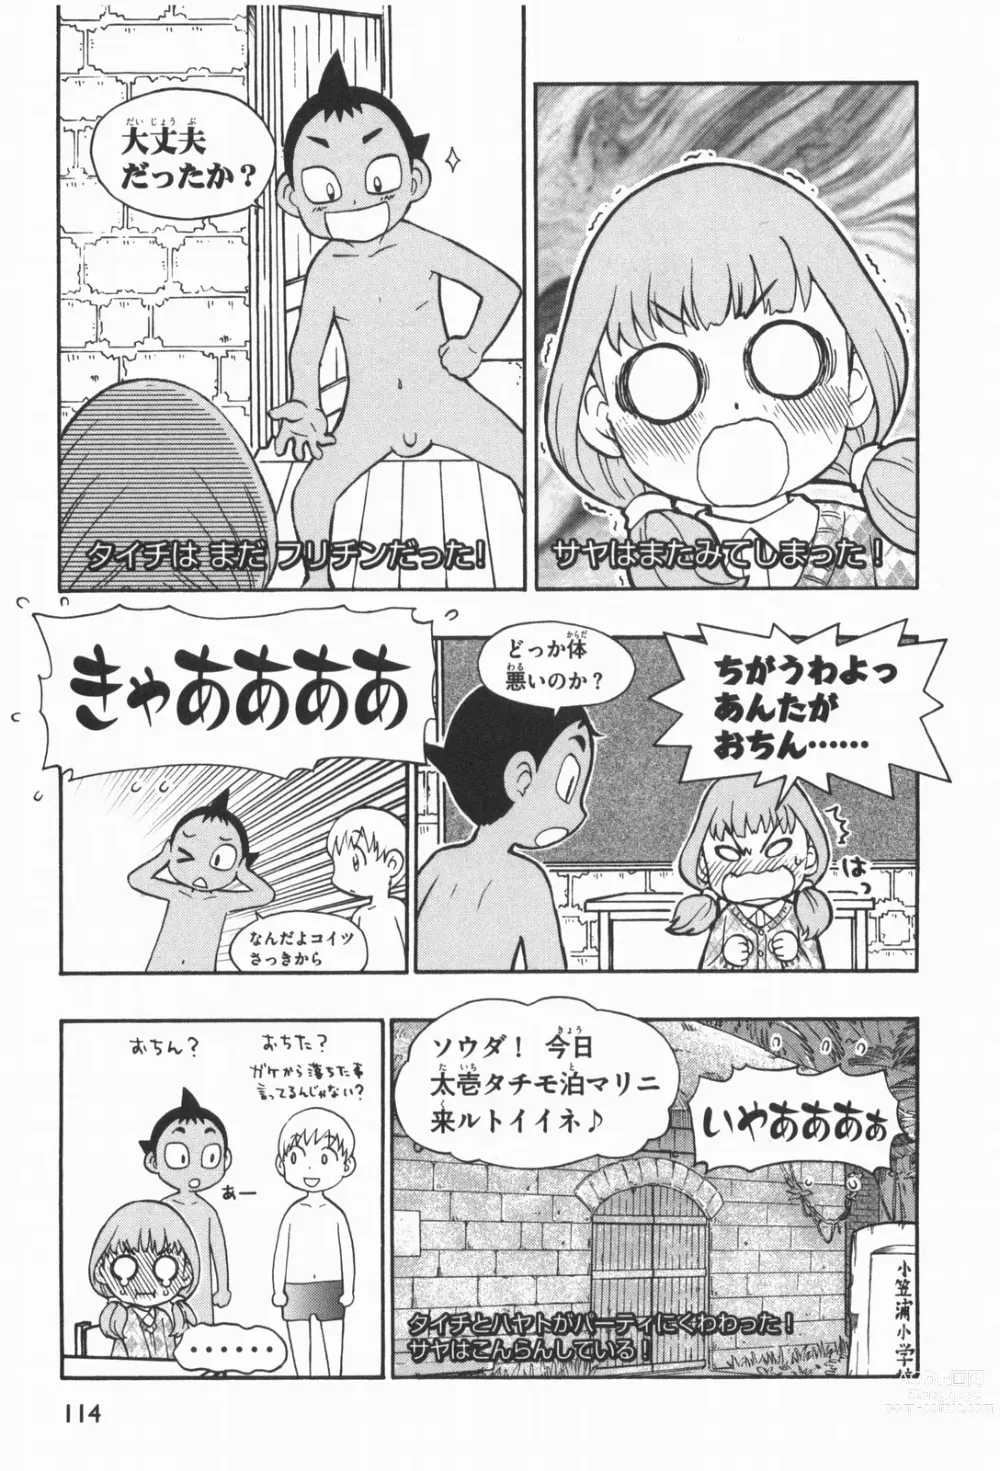 Page 8 of doujinshi Terao the Next Generation Machine